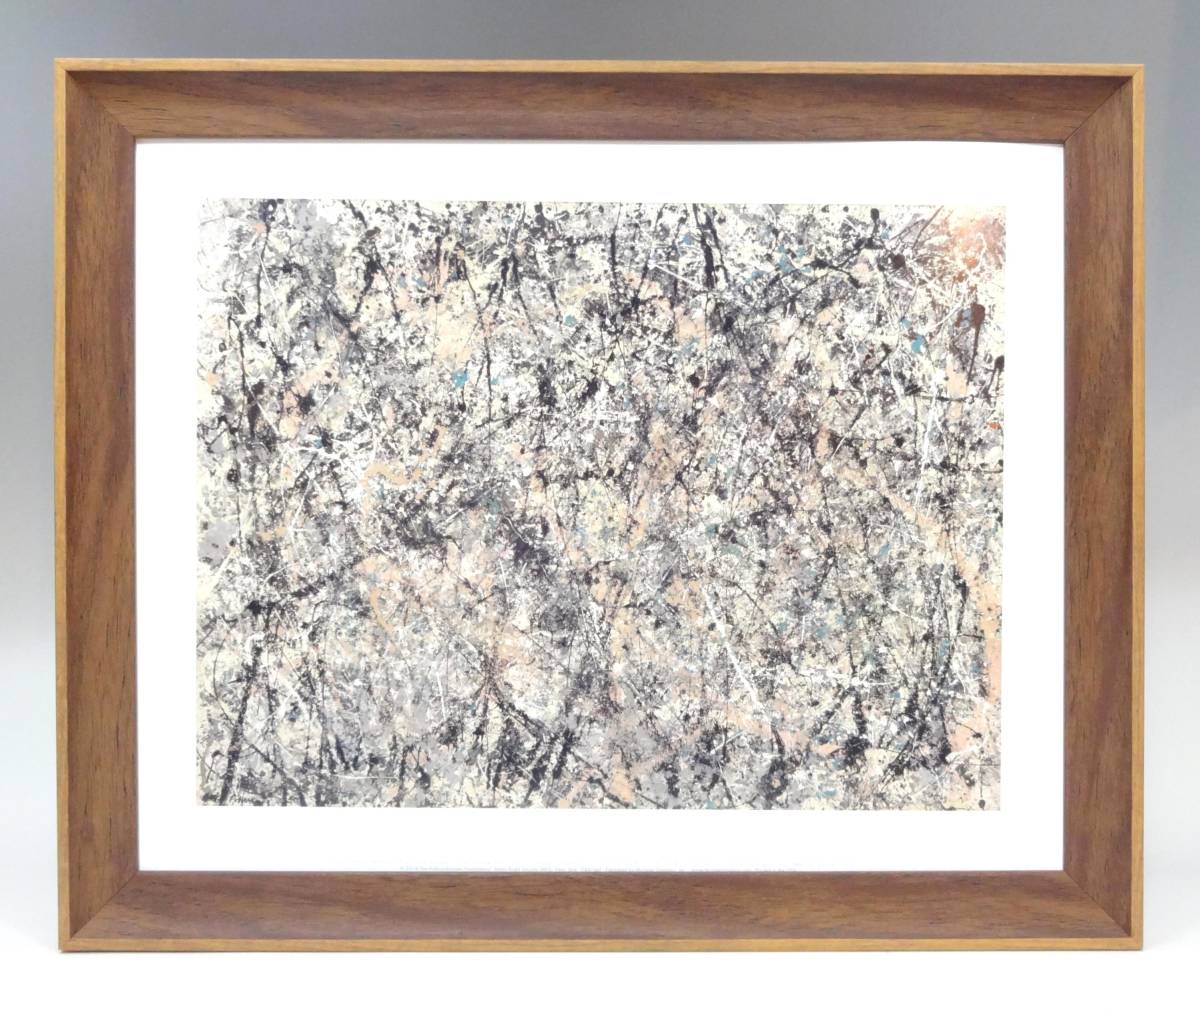 Neu ☆ Gerahmtes Kunstposter ◇ Jackson Pollock ☆ Jackson Pollock ☆ Gemälde ☆ Wandbehang ☆ Interieur ☆ Abstraktes Gemälde ☆ 141, Gedruckte Materialien, Poster, Andere